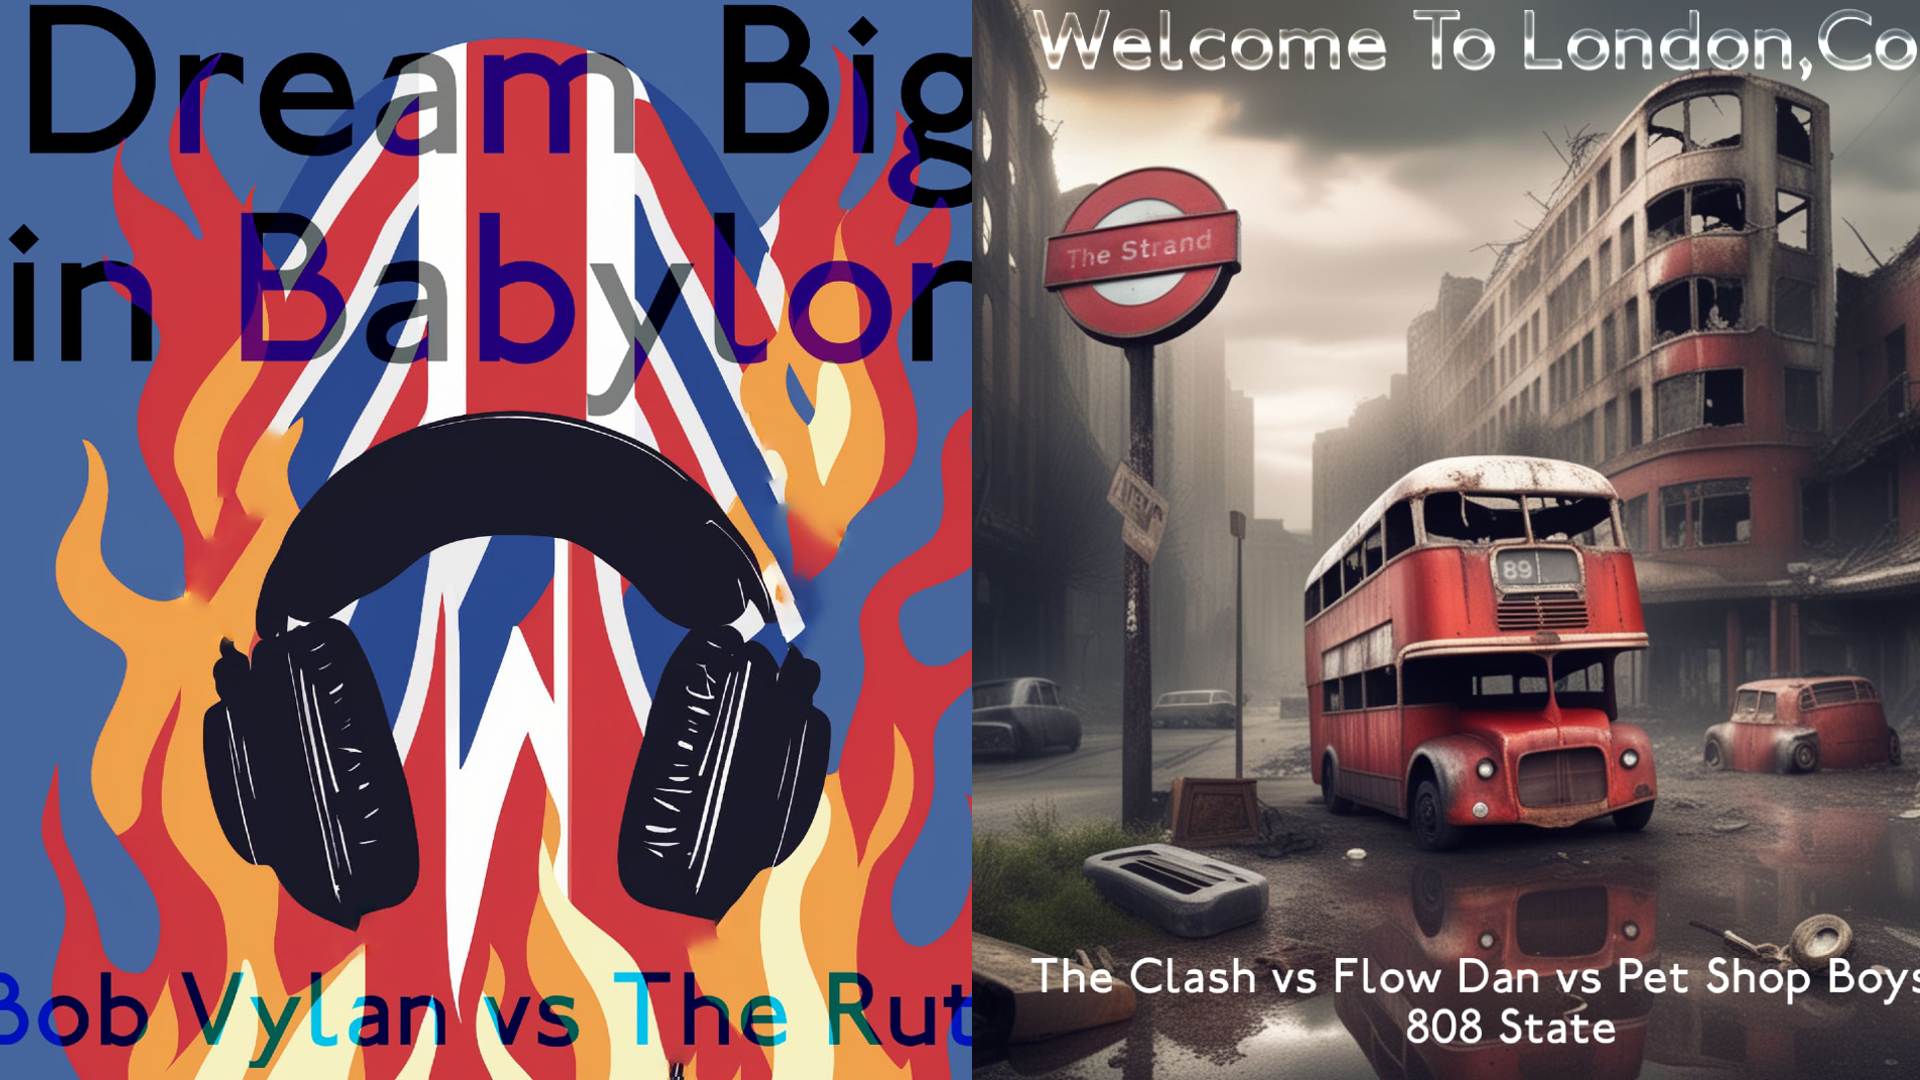 Instamatic - Welcome To London, Colin (The Clash vs Flowdan vs Pet Shop Boys vs 808 State) Captain Obvious - Dream Big In Babylon (Bob Vylan vs The Ruts) mashup cover mashup cover